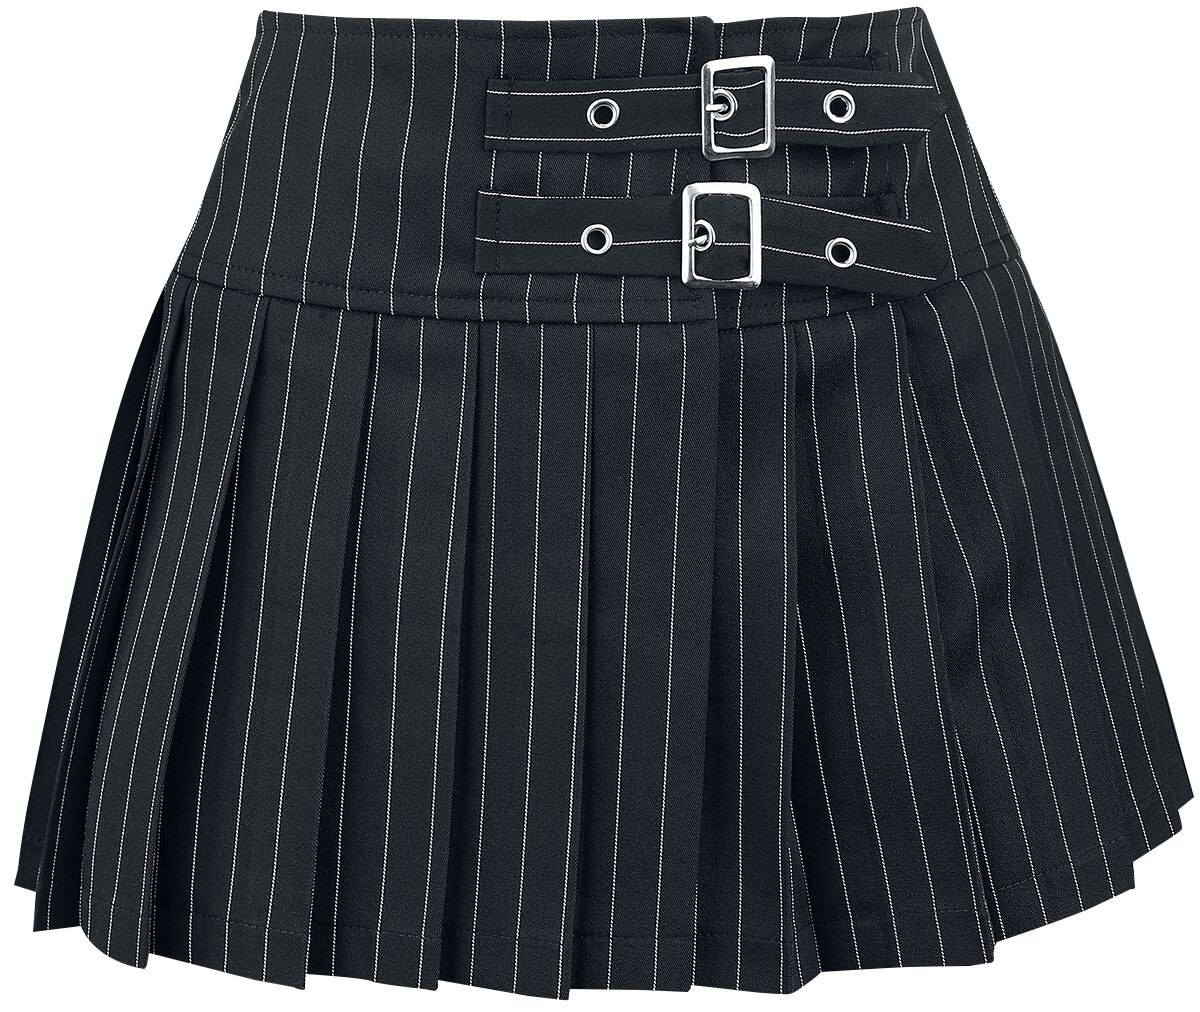 Image of Minigonna Gothic di Banned Alternative - Sisterhood skirt - XS a XL - Donna - nero/bianco